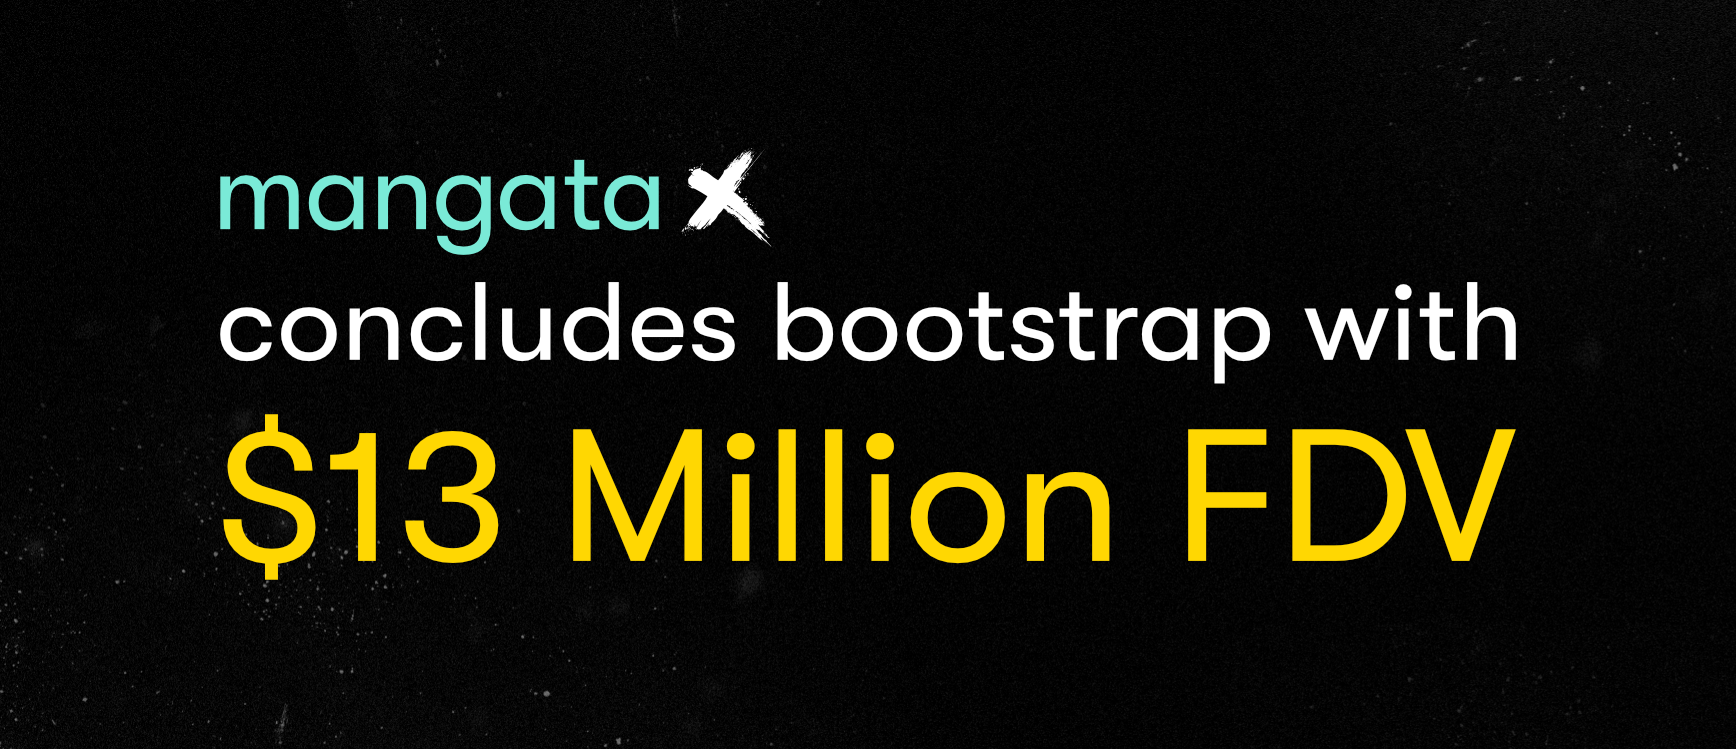 Mangata X Concludes Bootstrap with $13 Million FDV